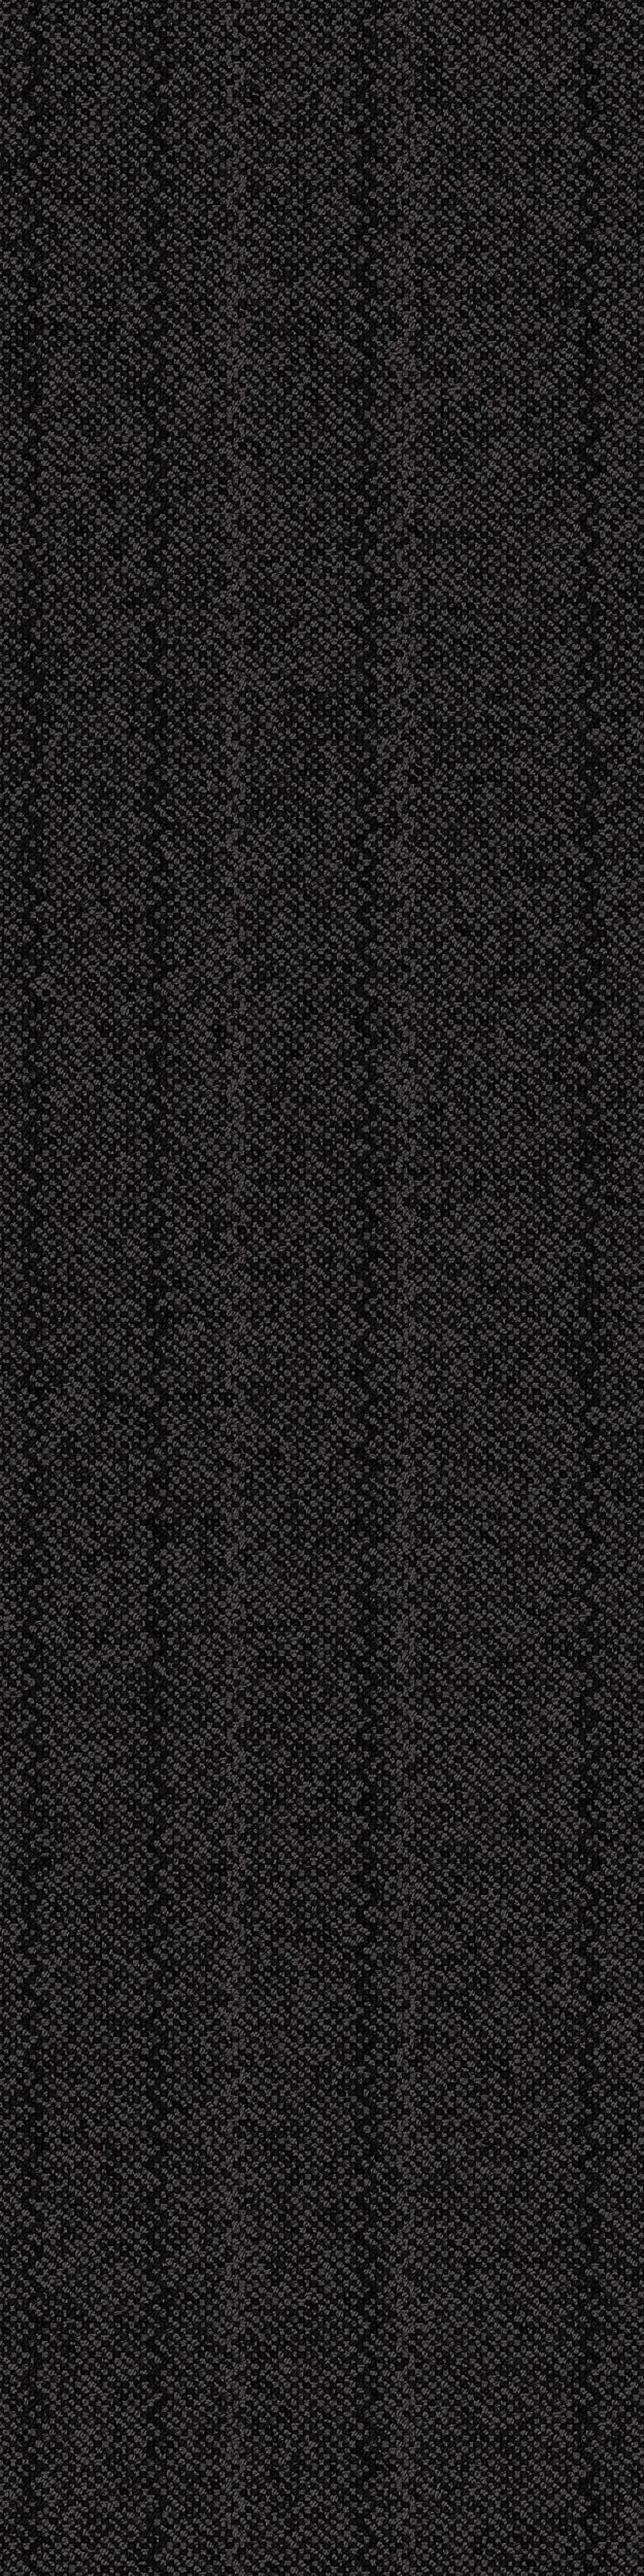 Visual Code - Plain Stitch - Black Plain from Inzide